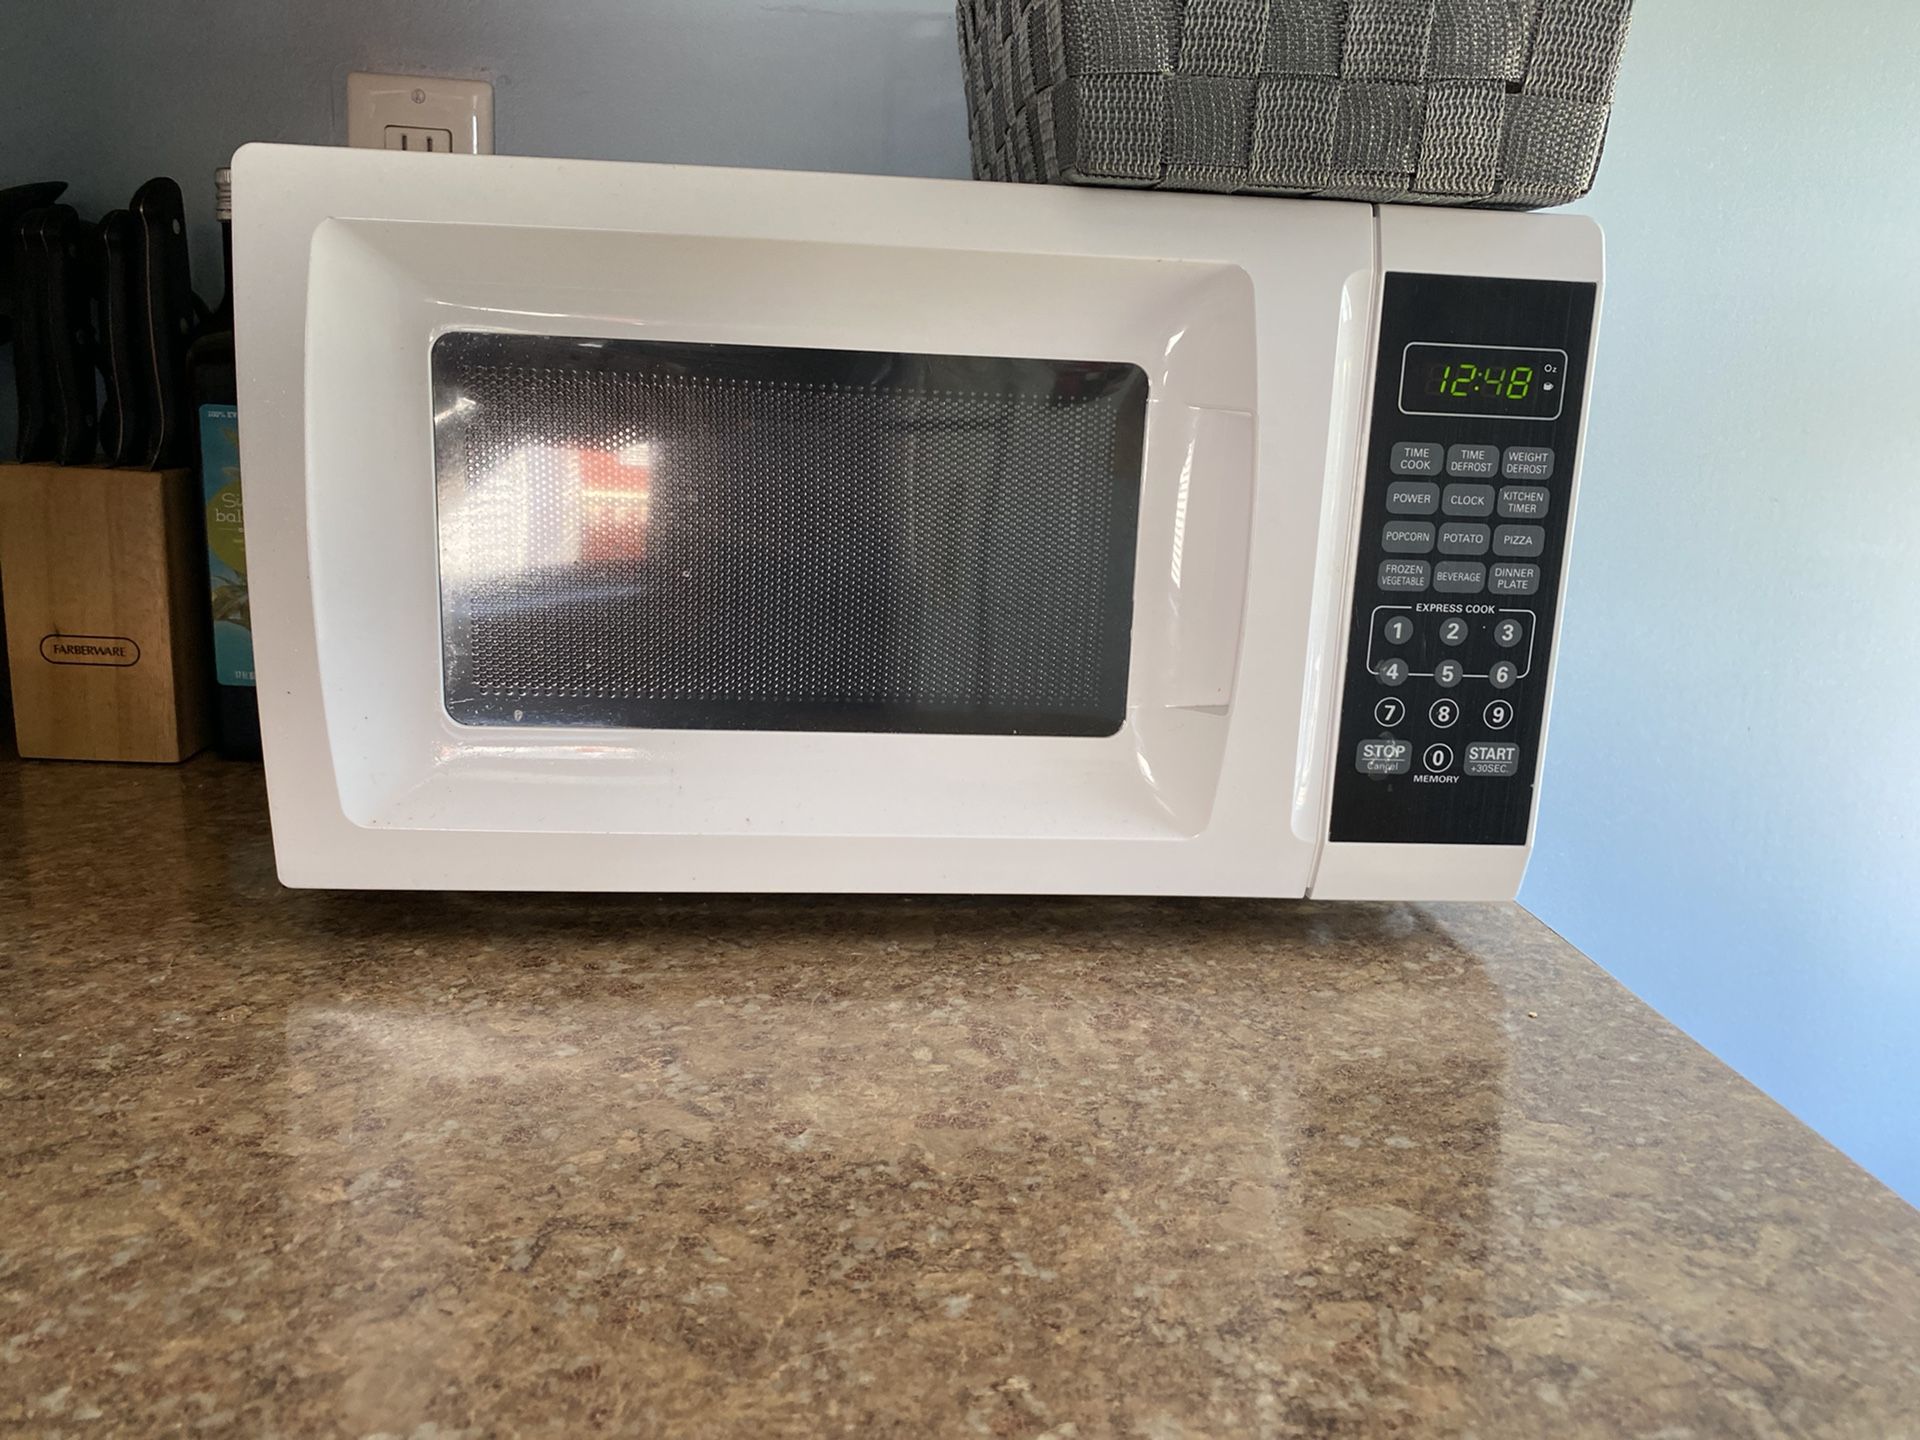 Microwave - 700 watt